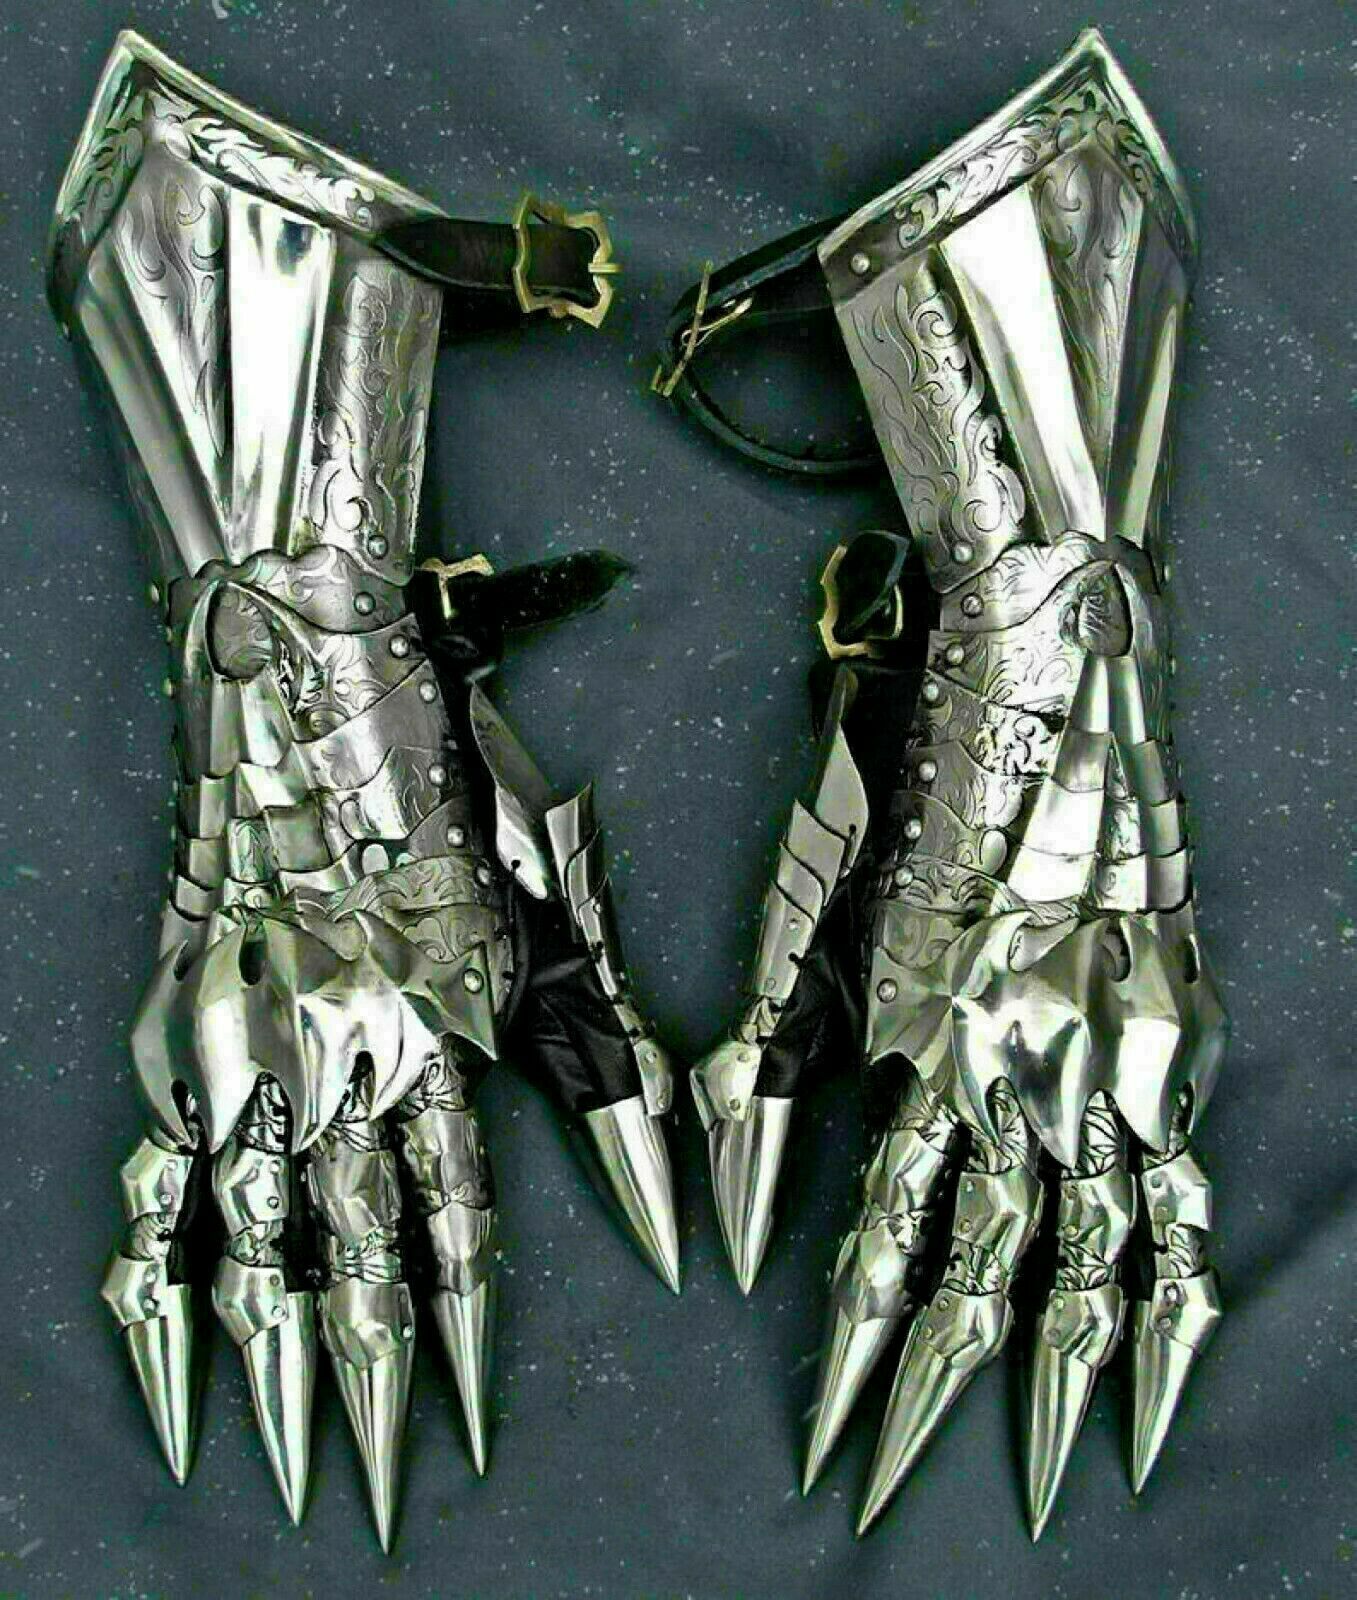 Gauntlet Gloves  medieval Pair Accents Knight Crusader Armor Steel Gauntlet Larp